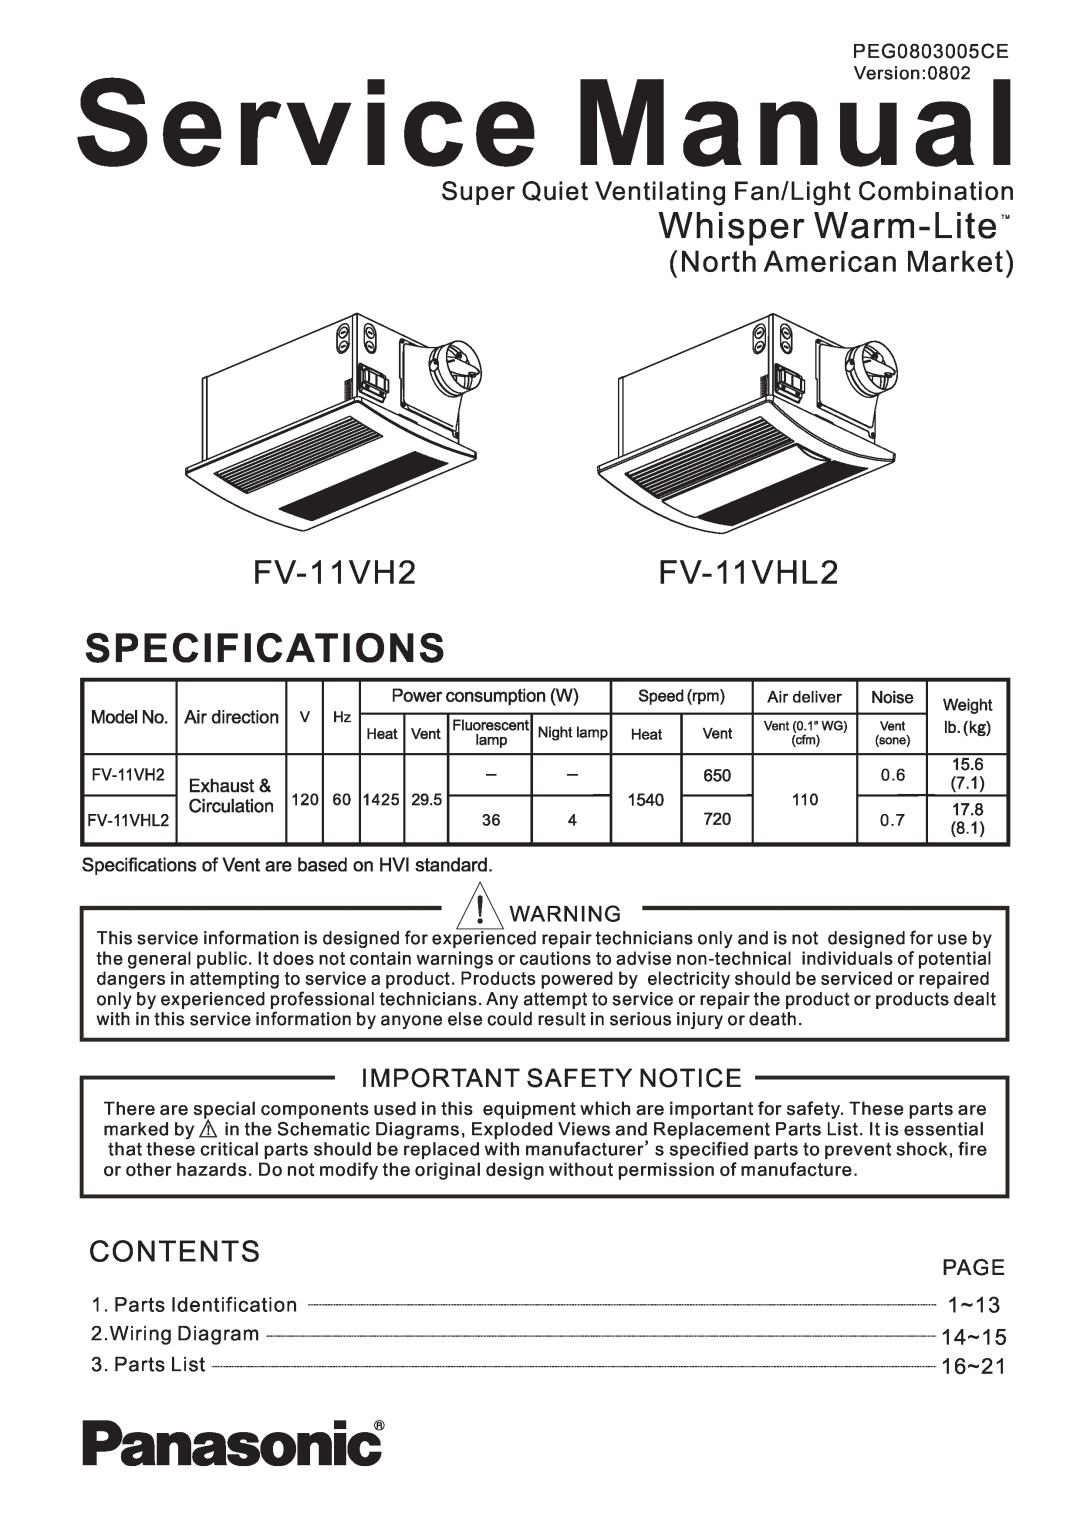 Panasonic FV-11VHL2 service manual FV-11VH2, Super Quiet Ventilating Fan/Light Combination, Important Safety Notice 